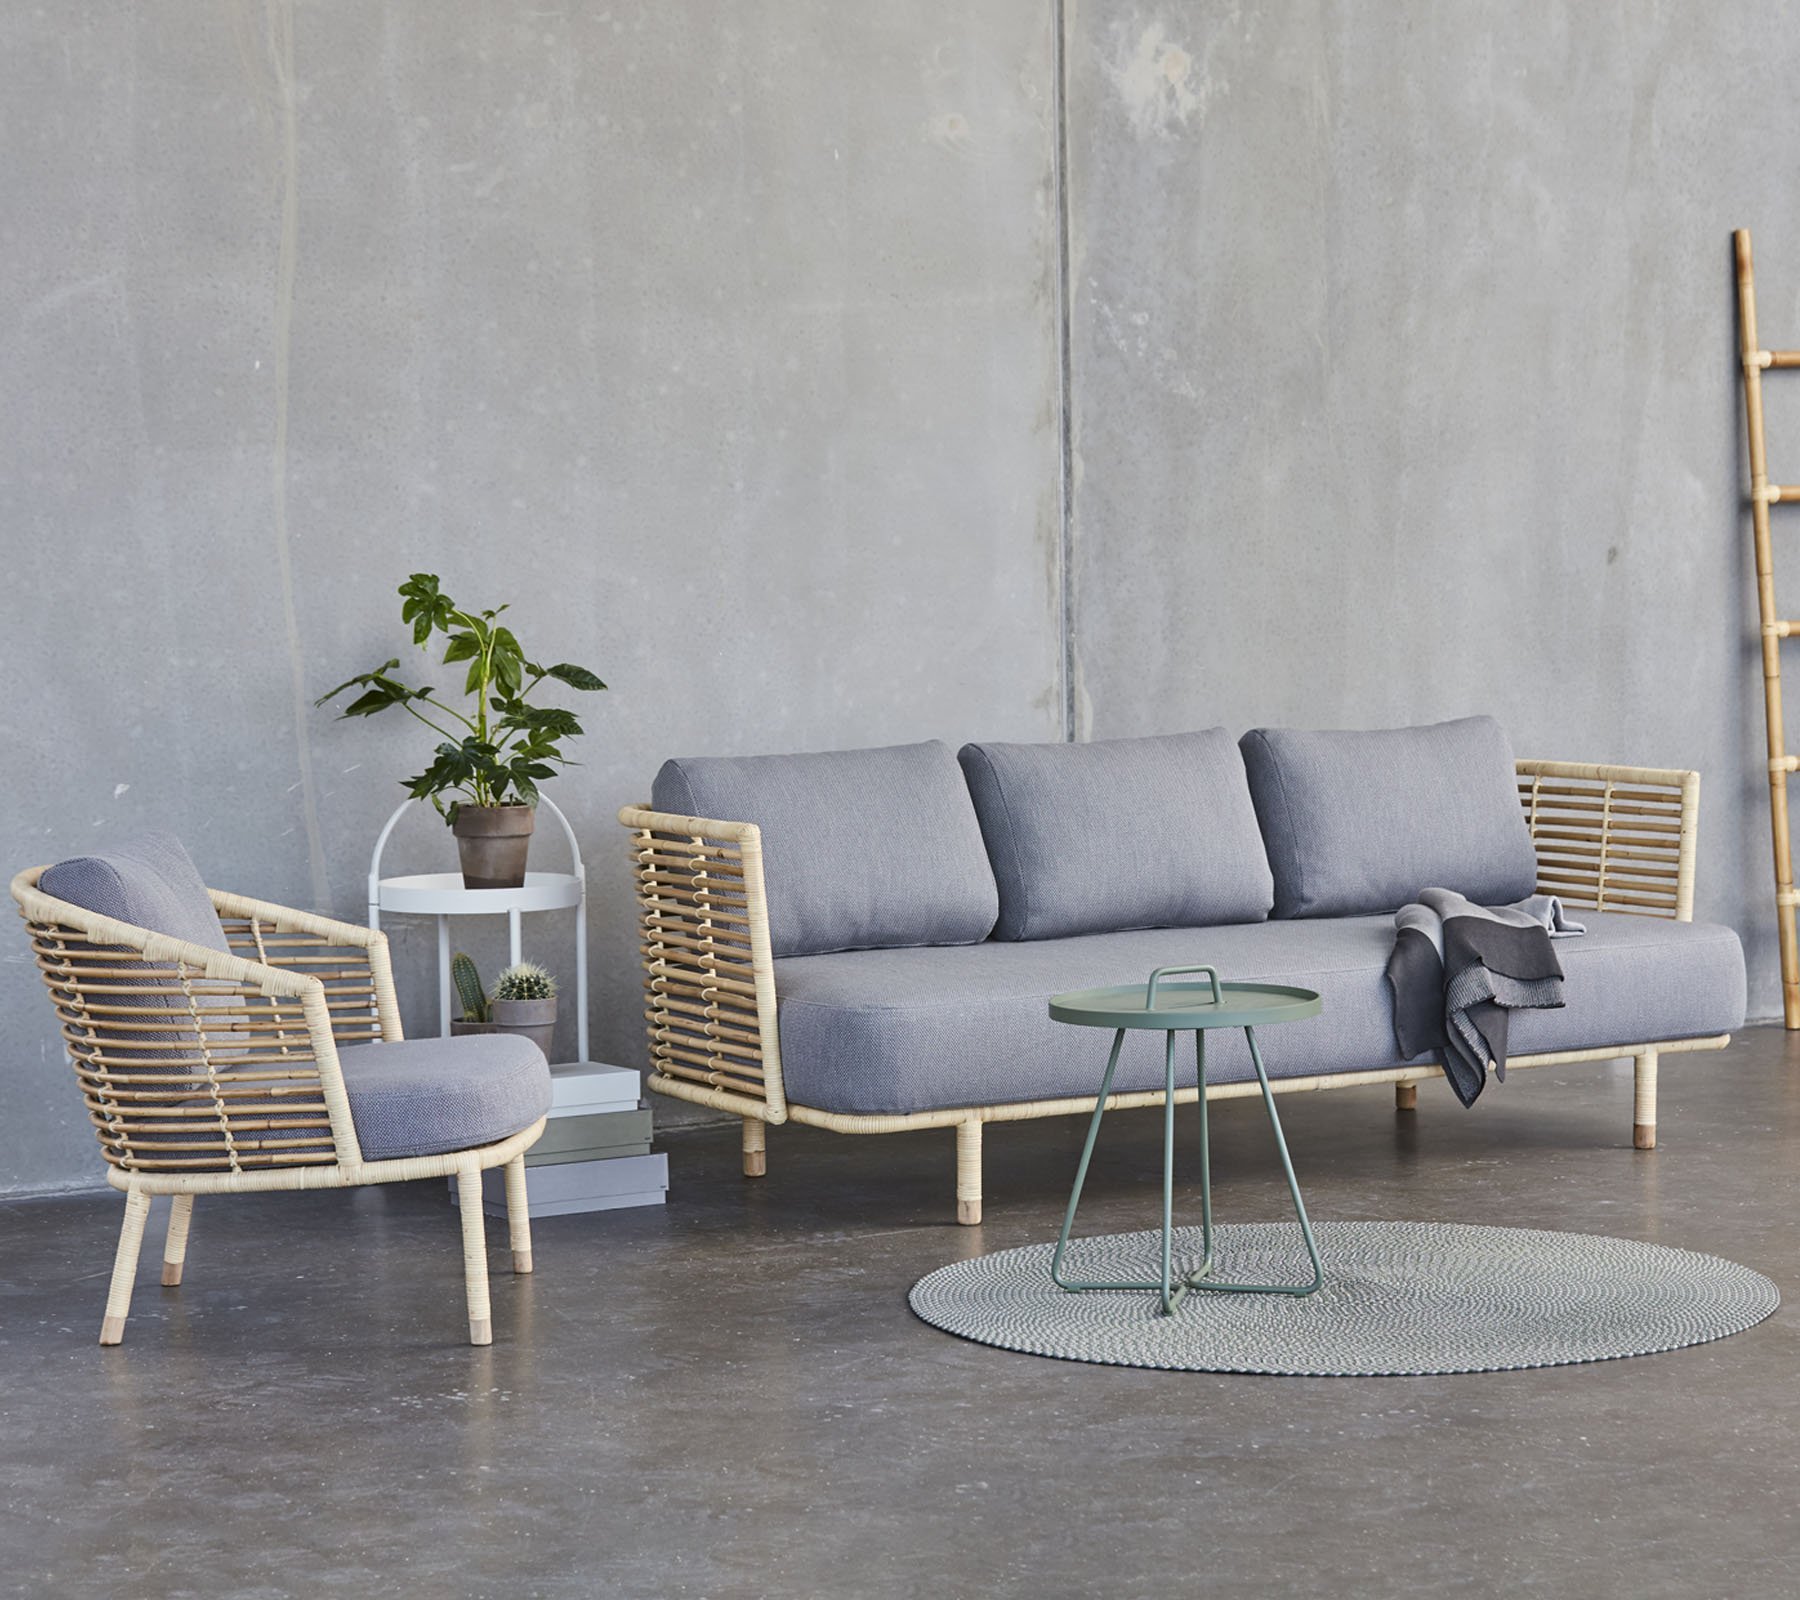 Sense Lounge Chair from Cane-line, designed by Foersom & Hiort-Lorenzen MDD